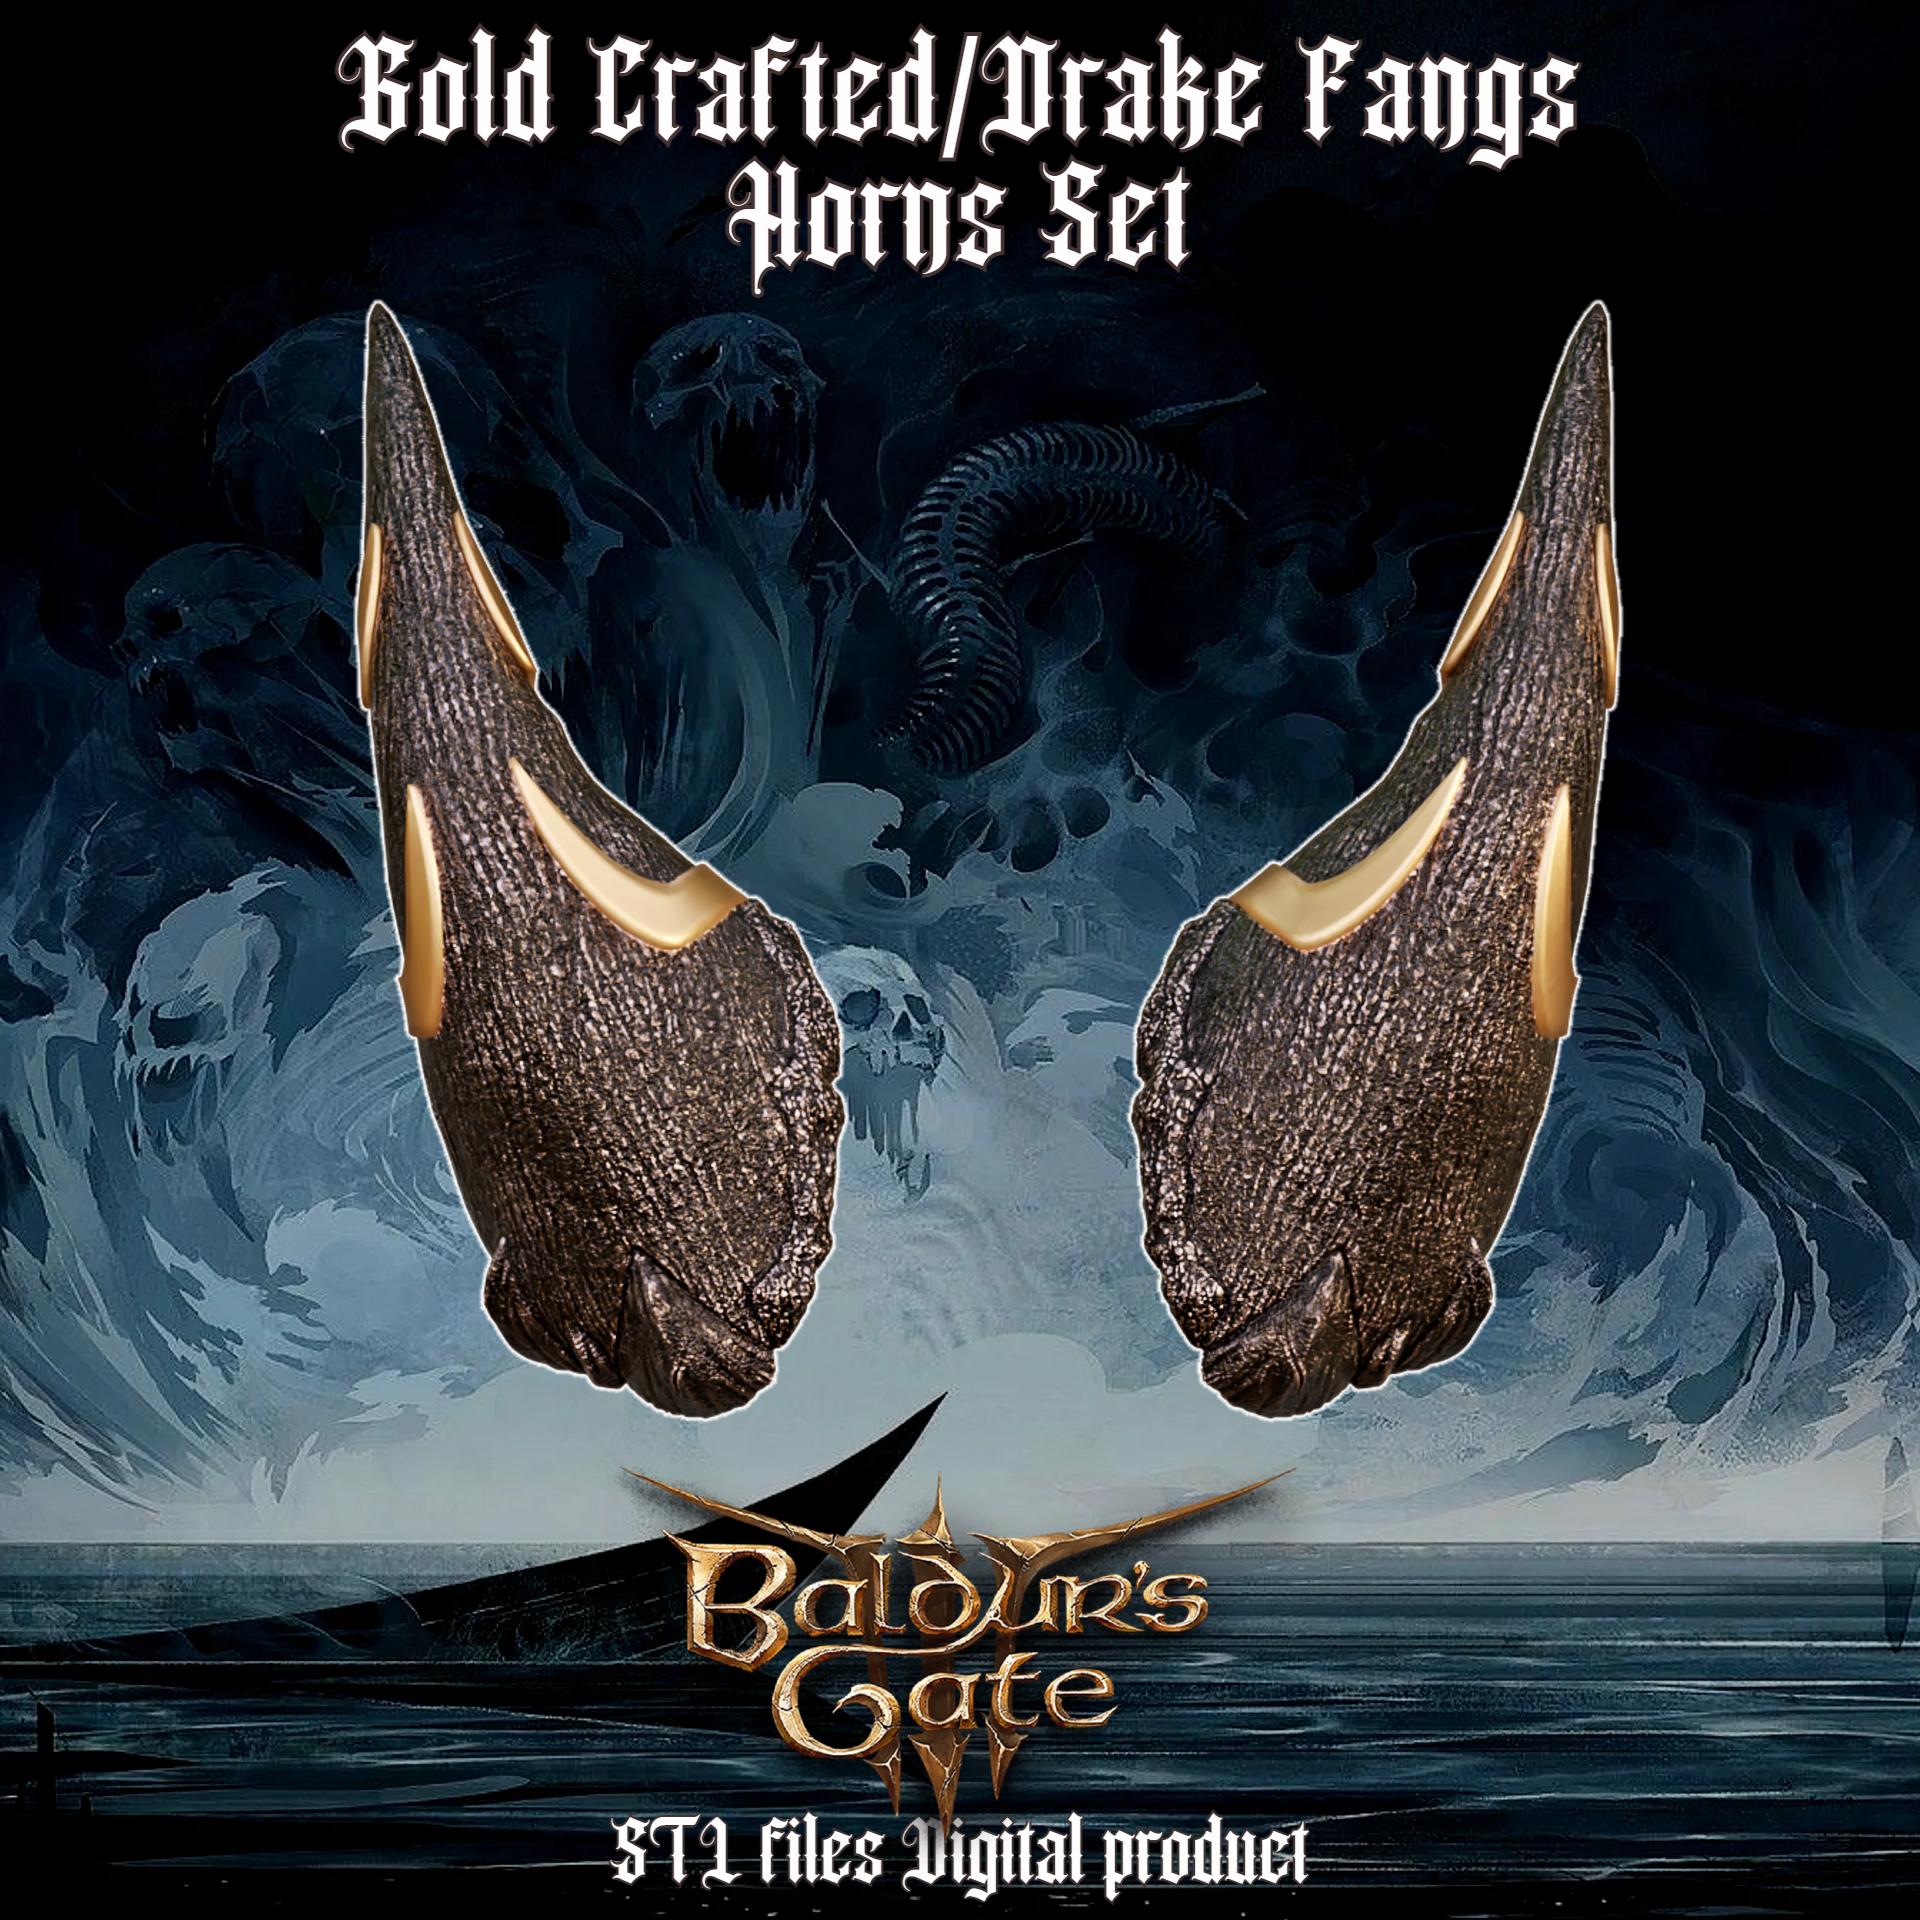 FANTASY DRAKE FANGS AND GOLD CRAFTED HORNS SET BALDURS GATE 3 3d model